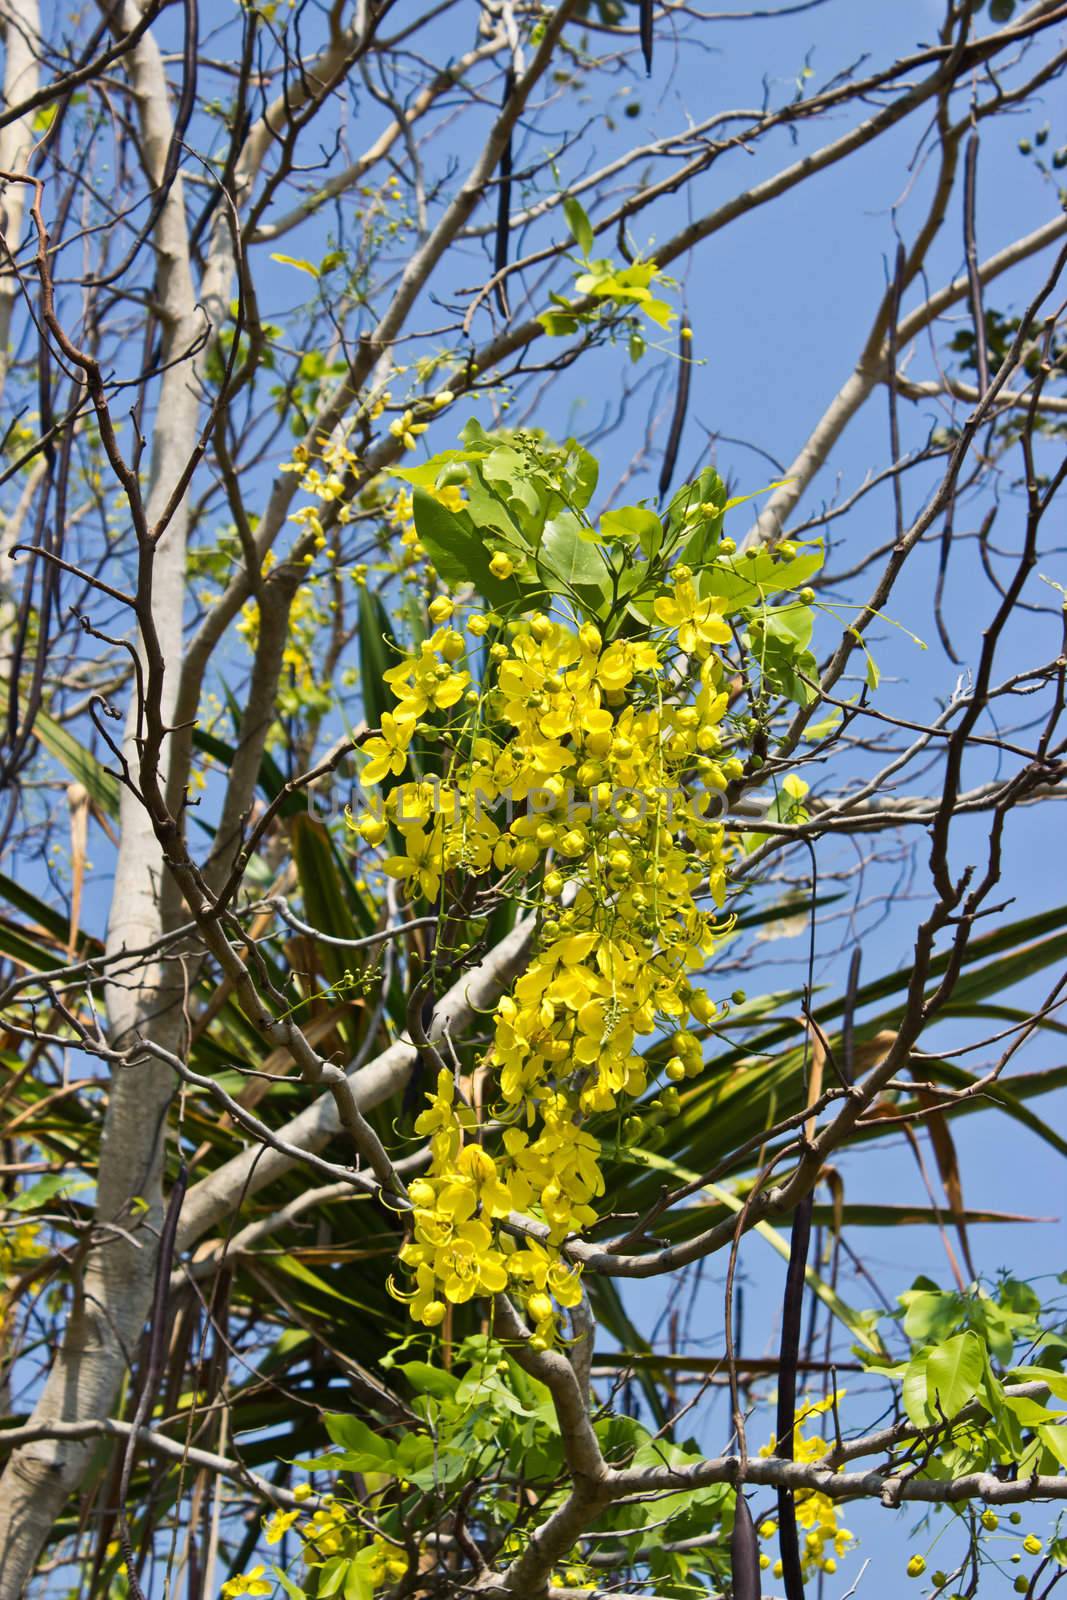 Golden Flower or Cassia Fistula, national flower of Thailand